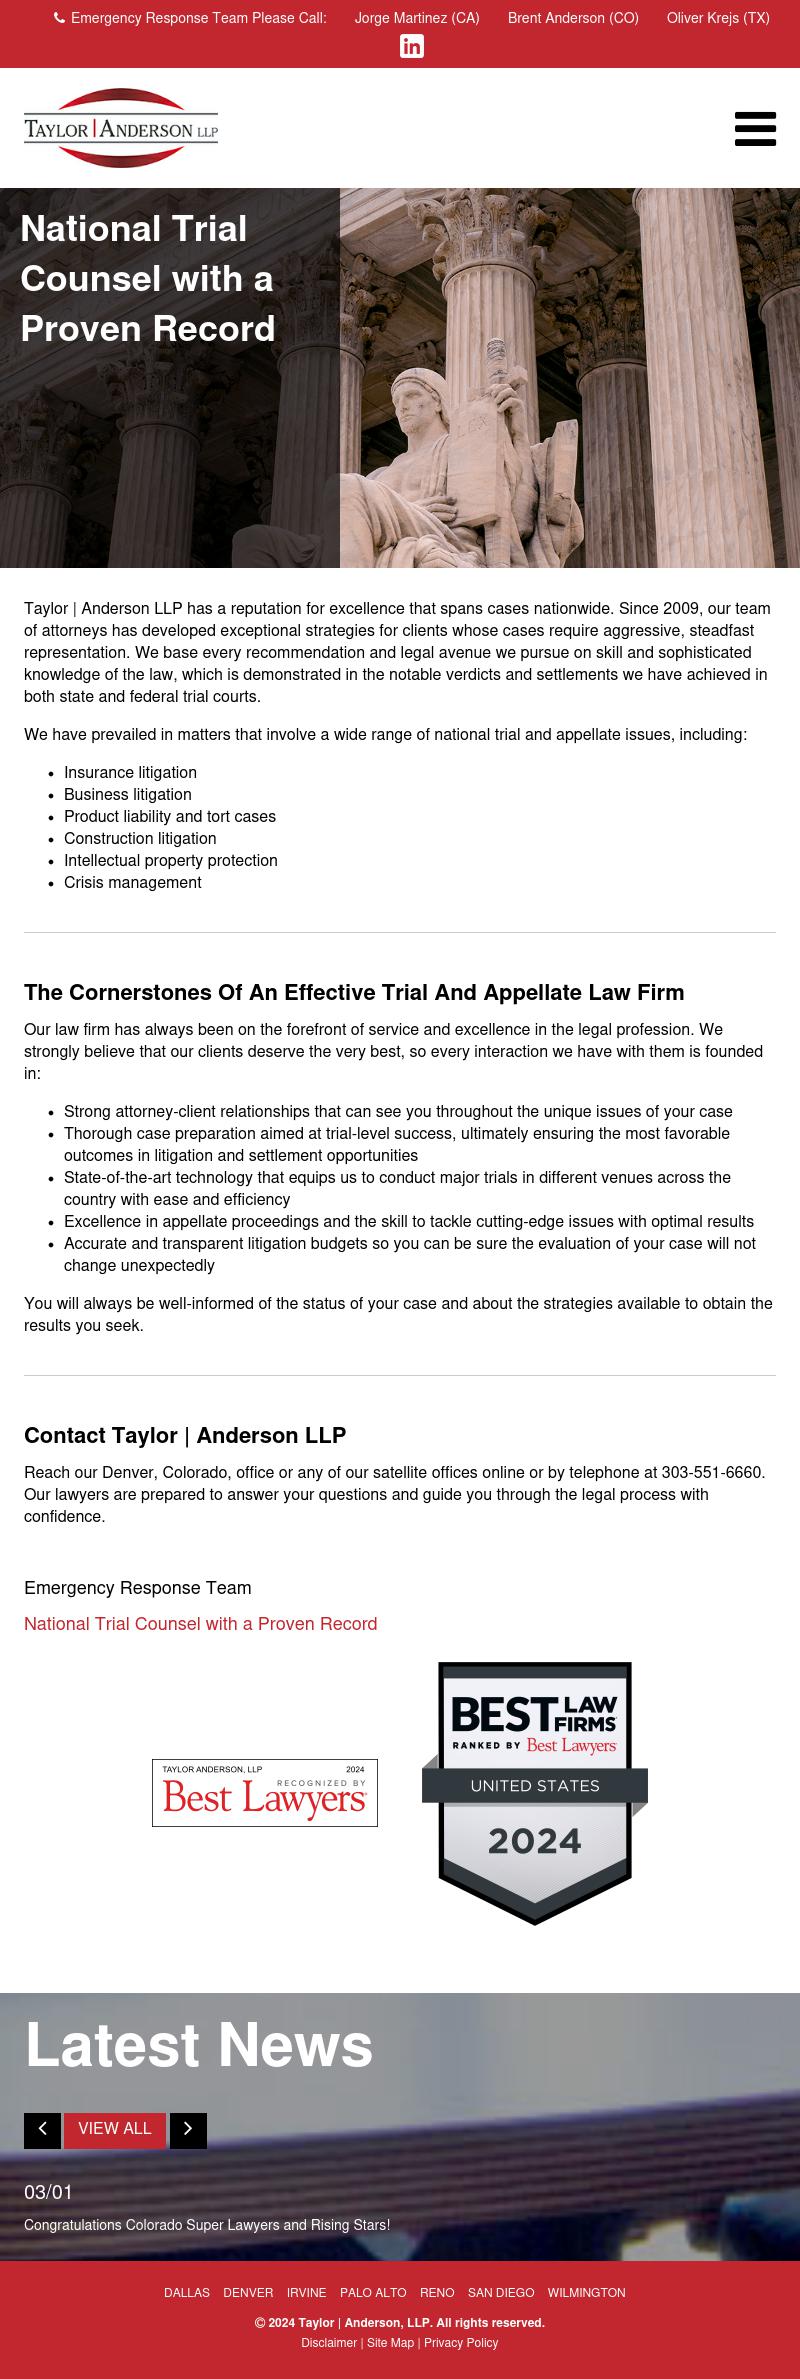 Taylor | Anderson, LLP - Scottsdale AZ Lawyers